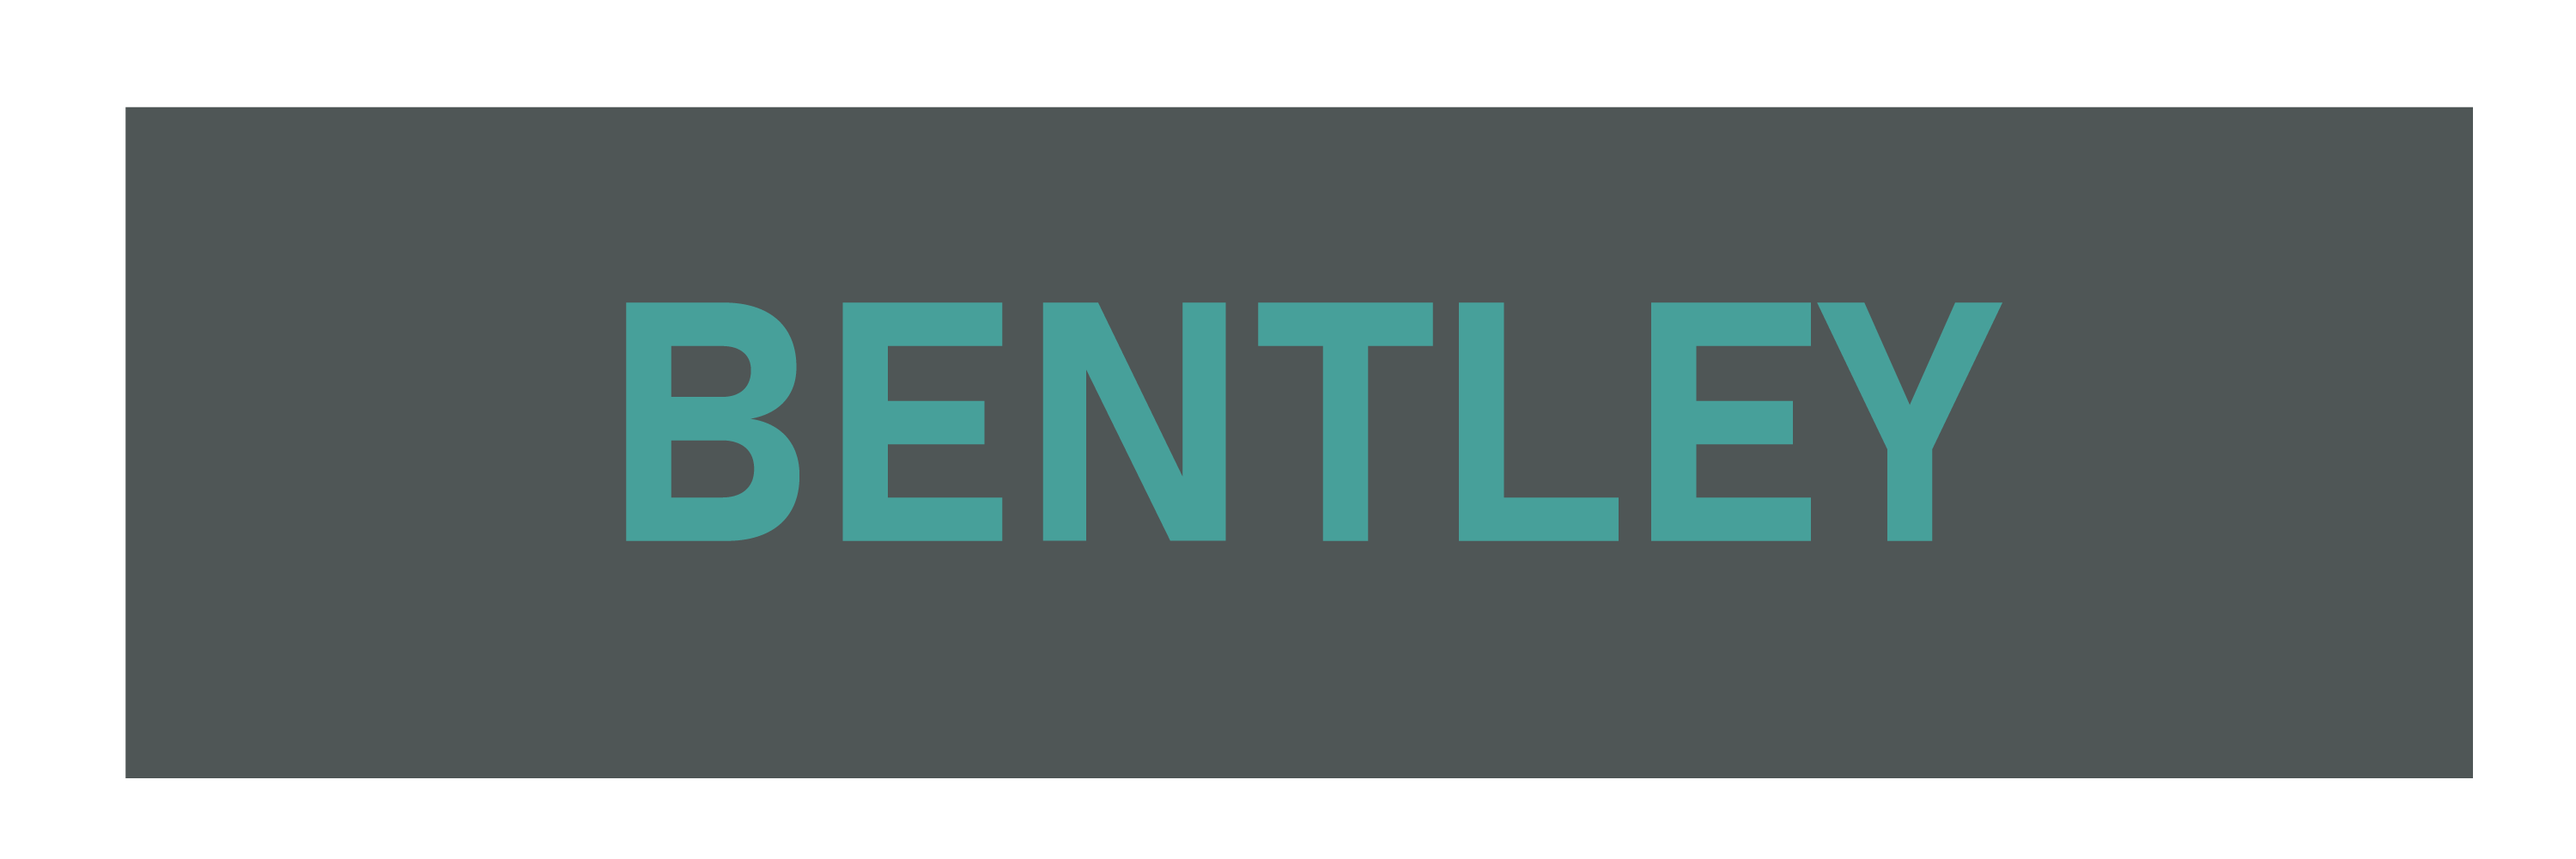 bentley-logo-alt